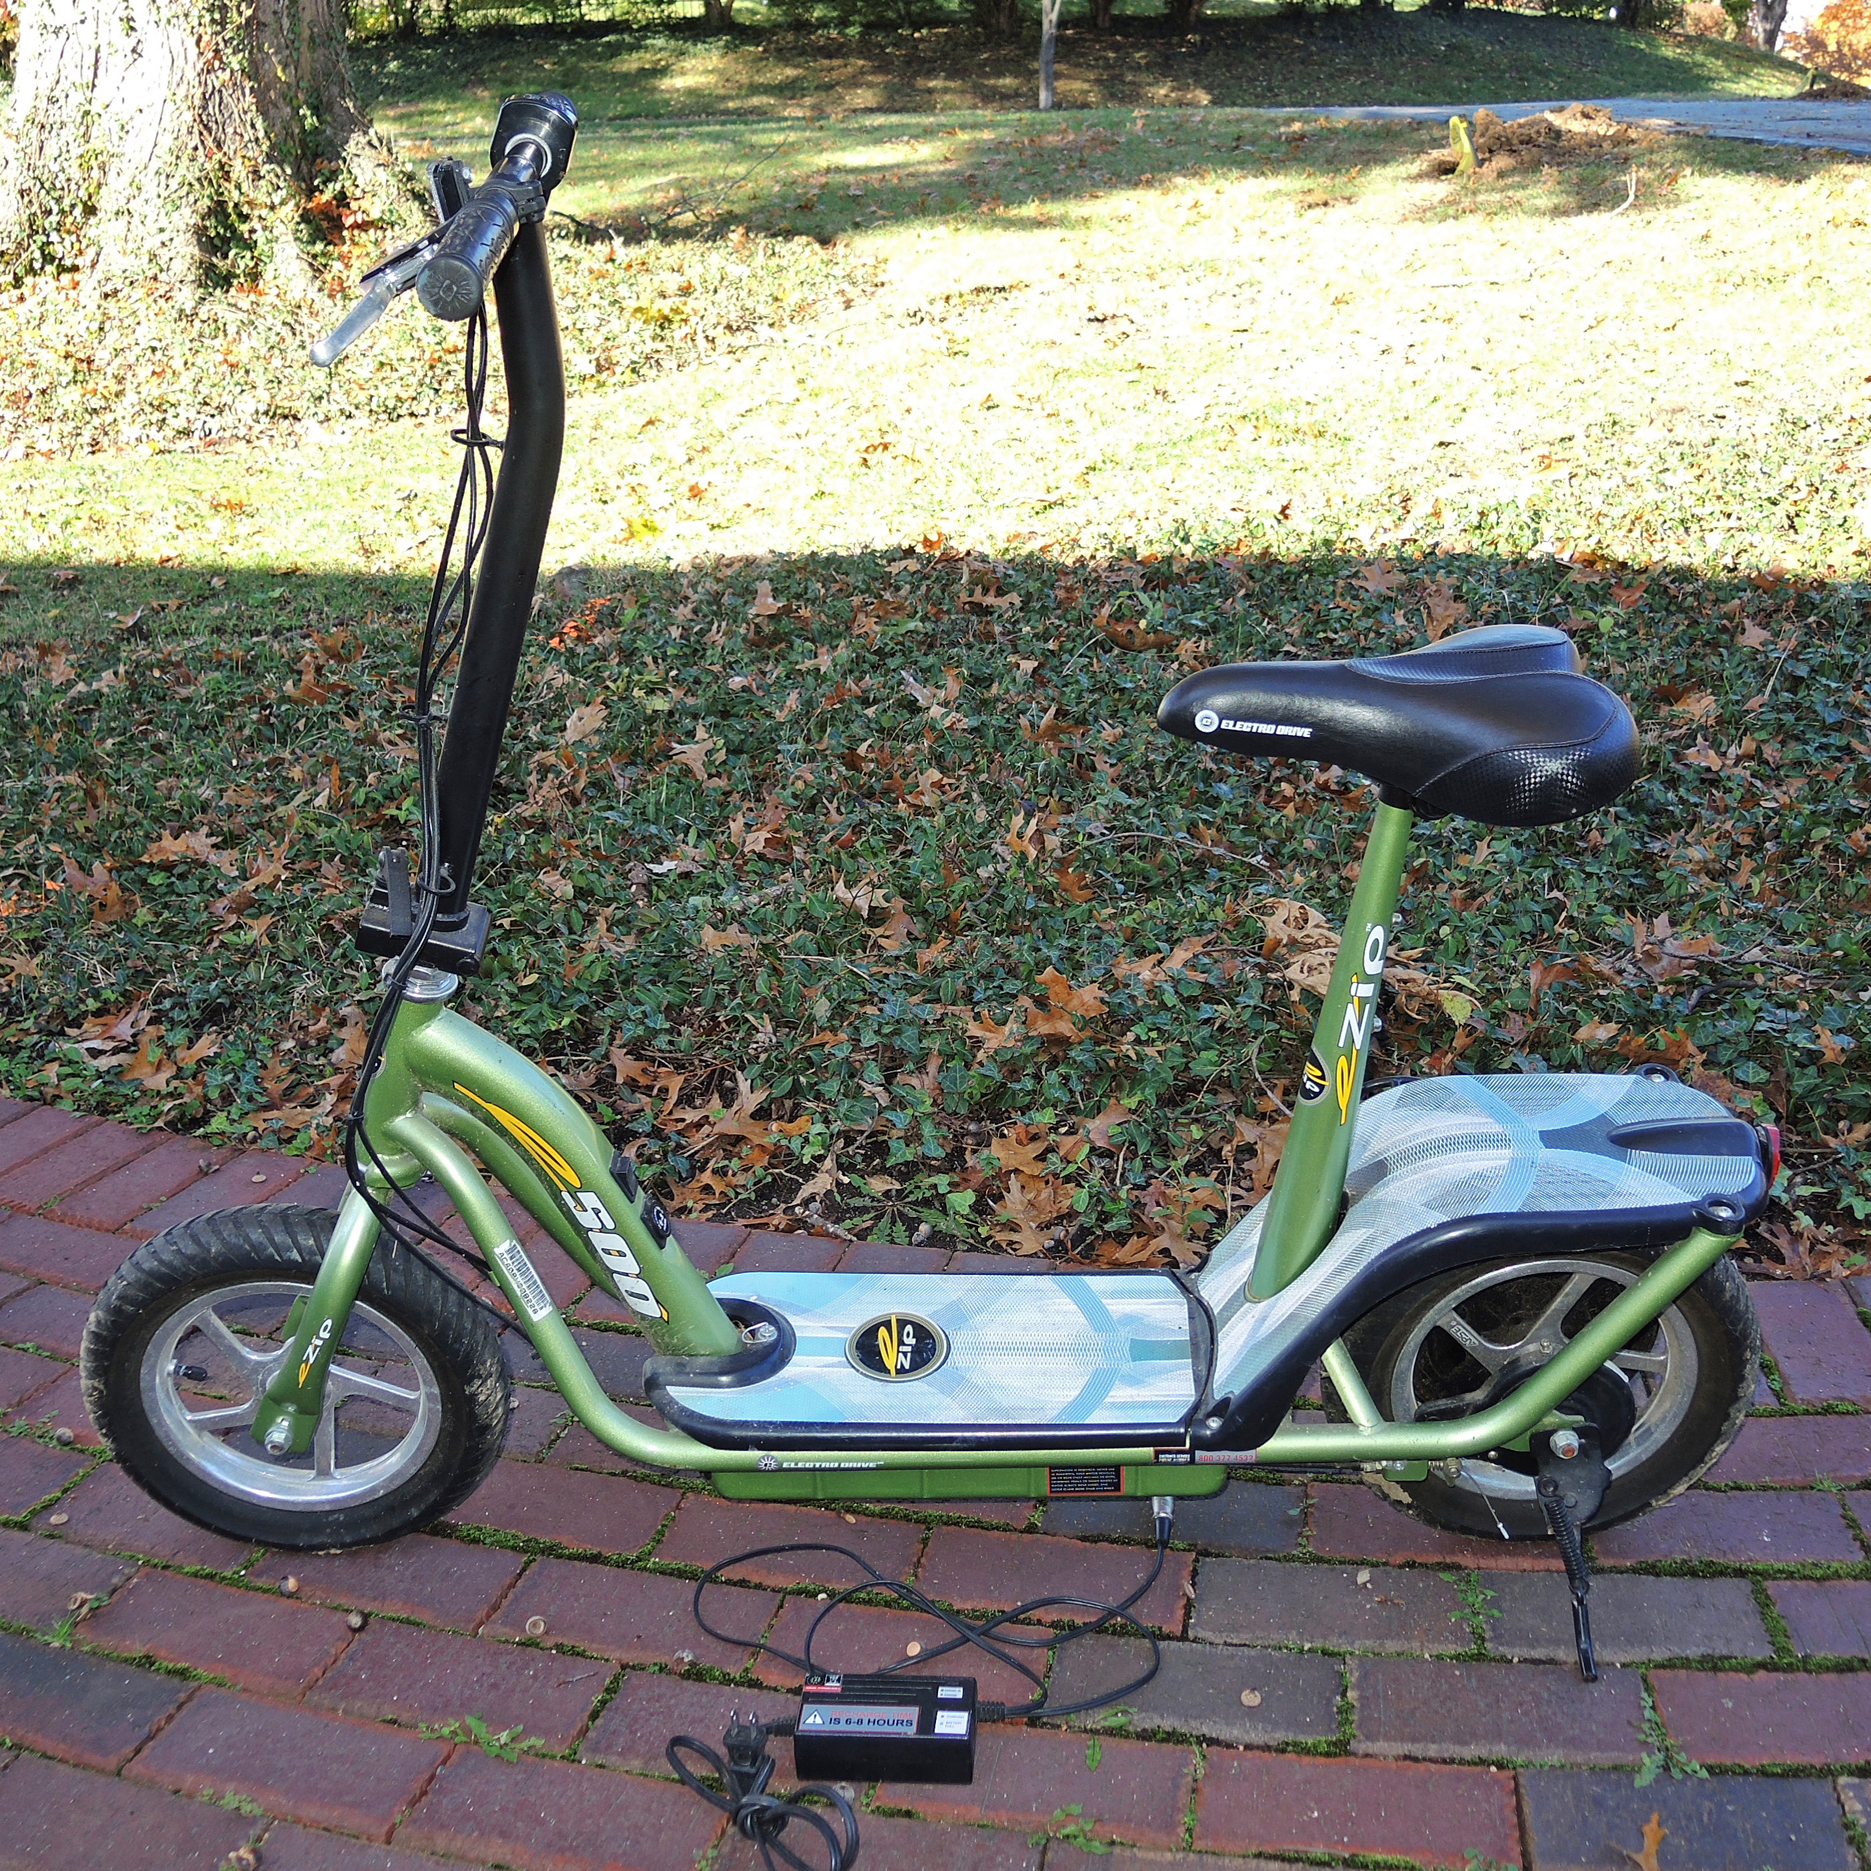 ezip scooter 1000